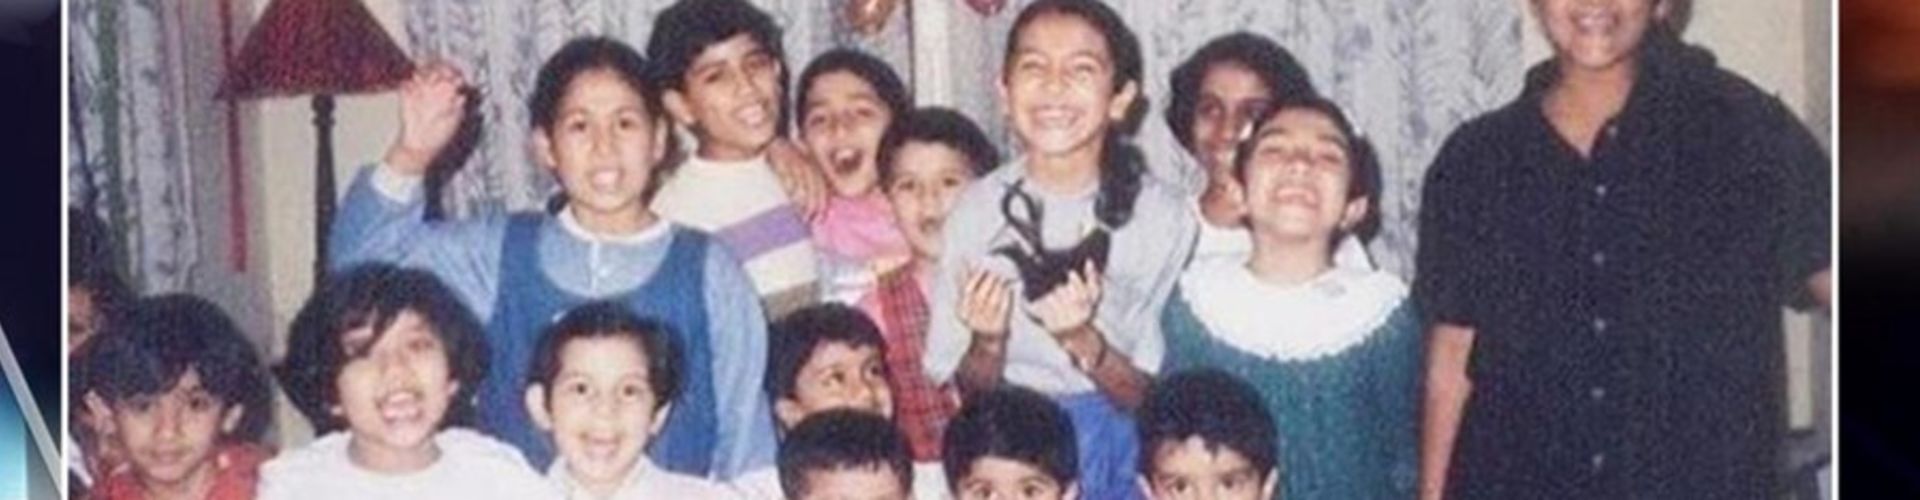 Anushka Sharma remembers her childhood friends on friendship day